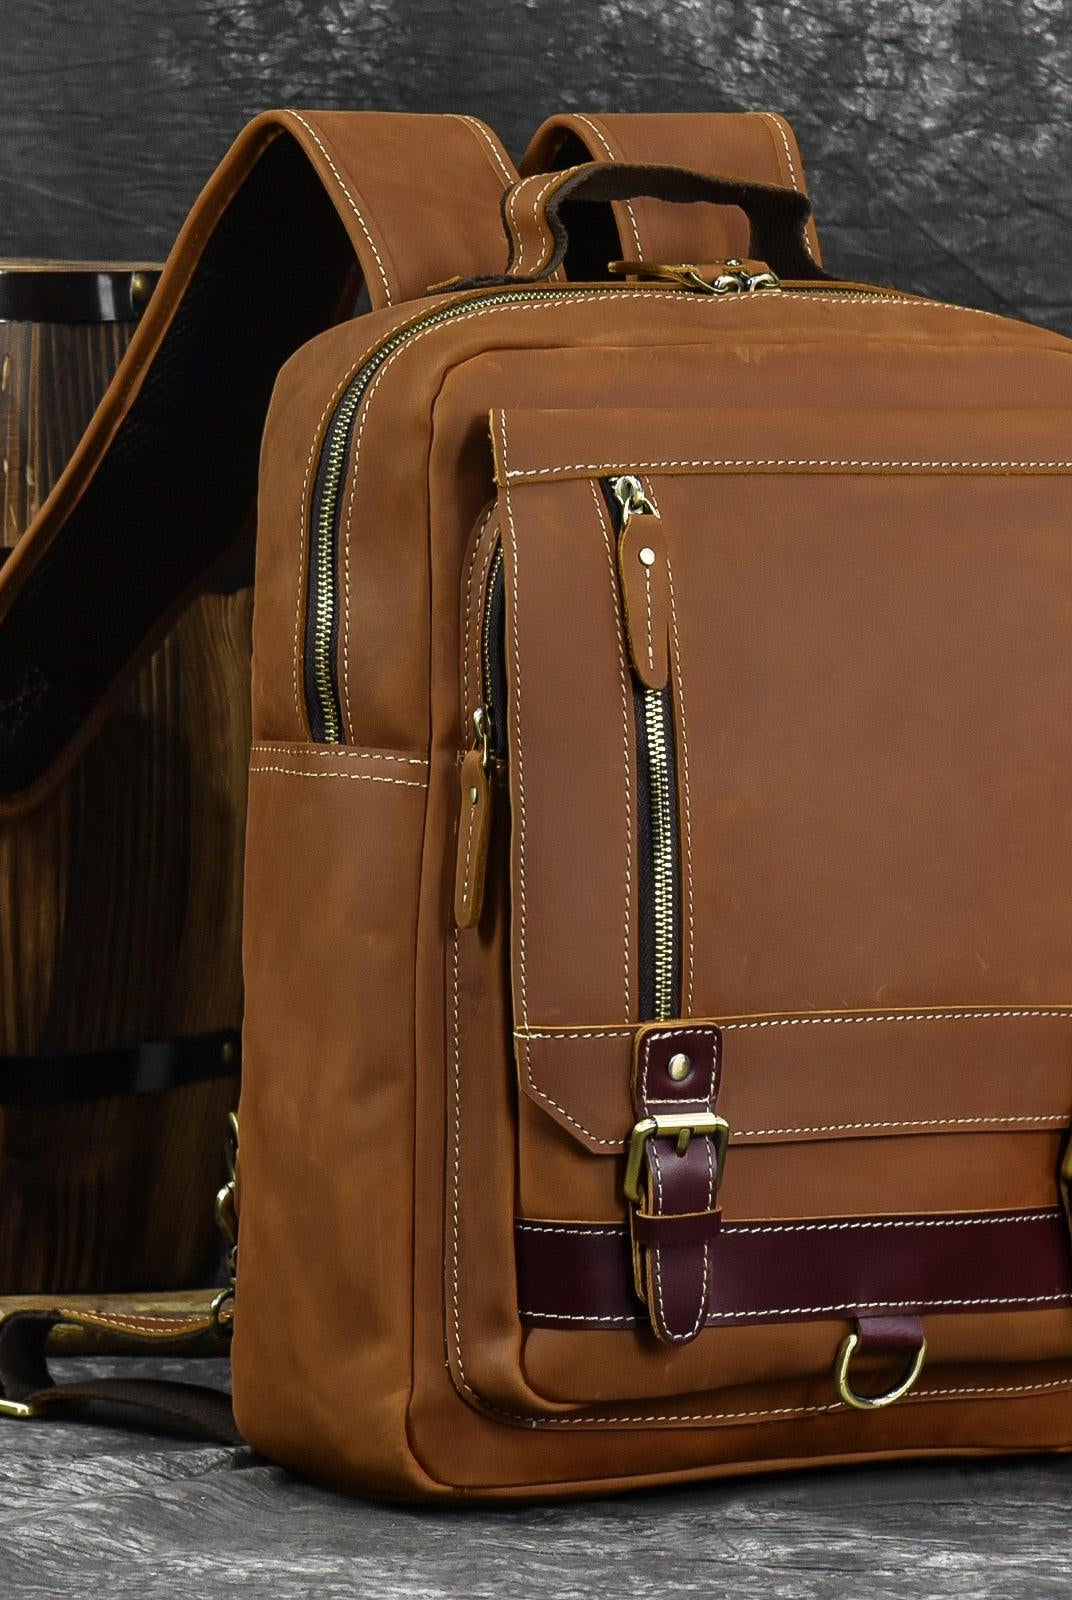 Luggage & Bags - Backpacks Mens Leather Shoulder Backpack Sling Travel Weekender Bag